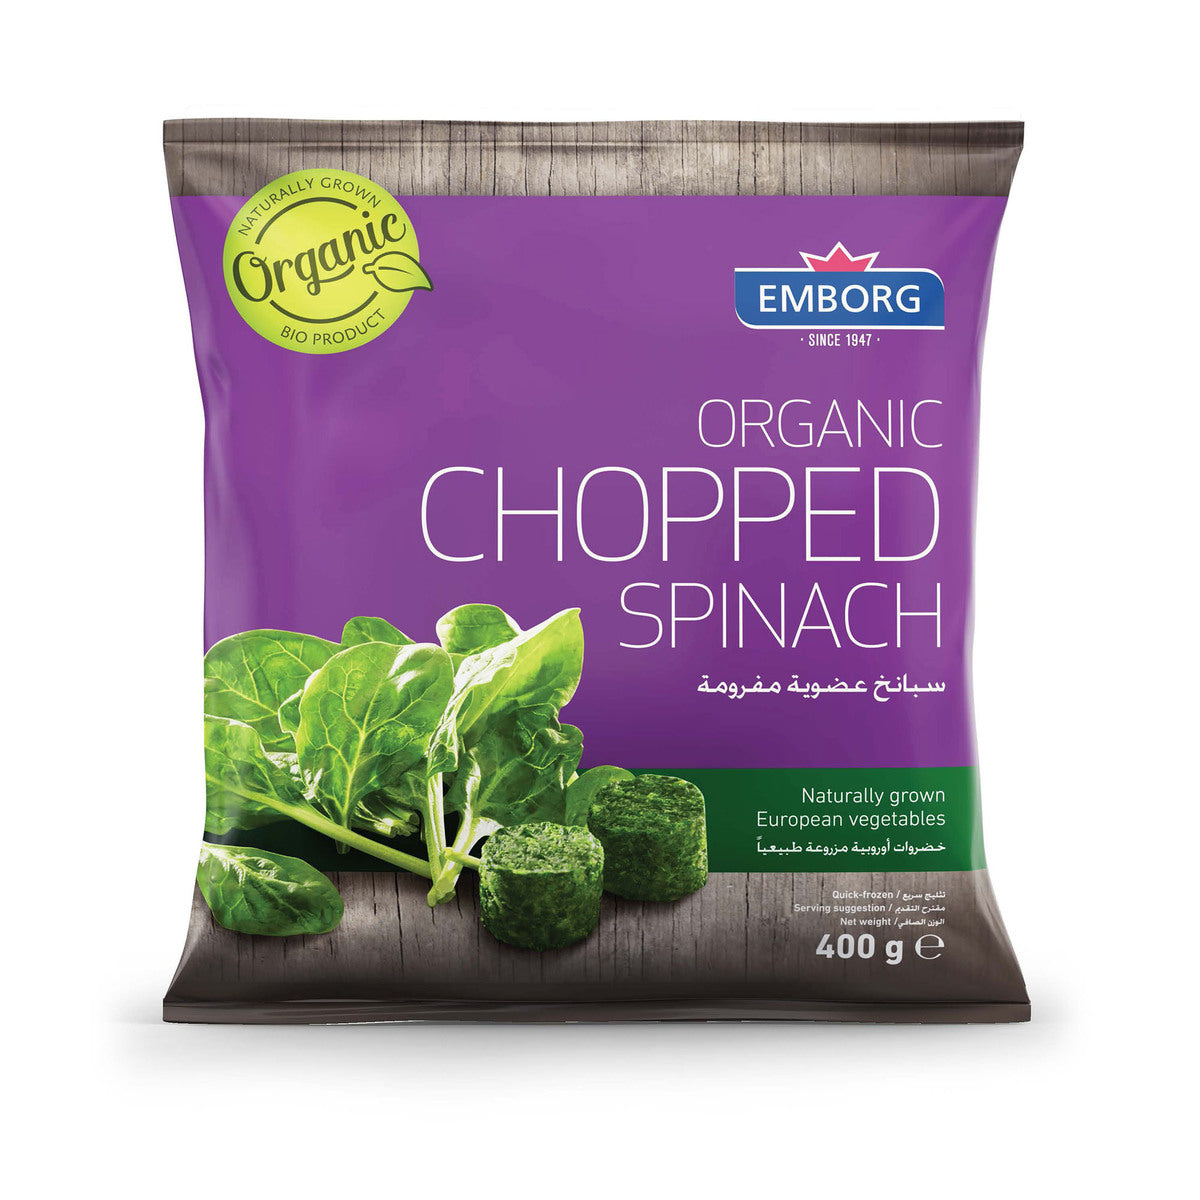 EMBORG Organic Spinach - Chopped, 400g